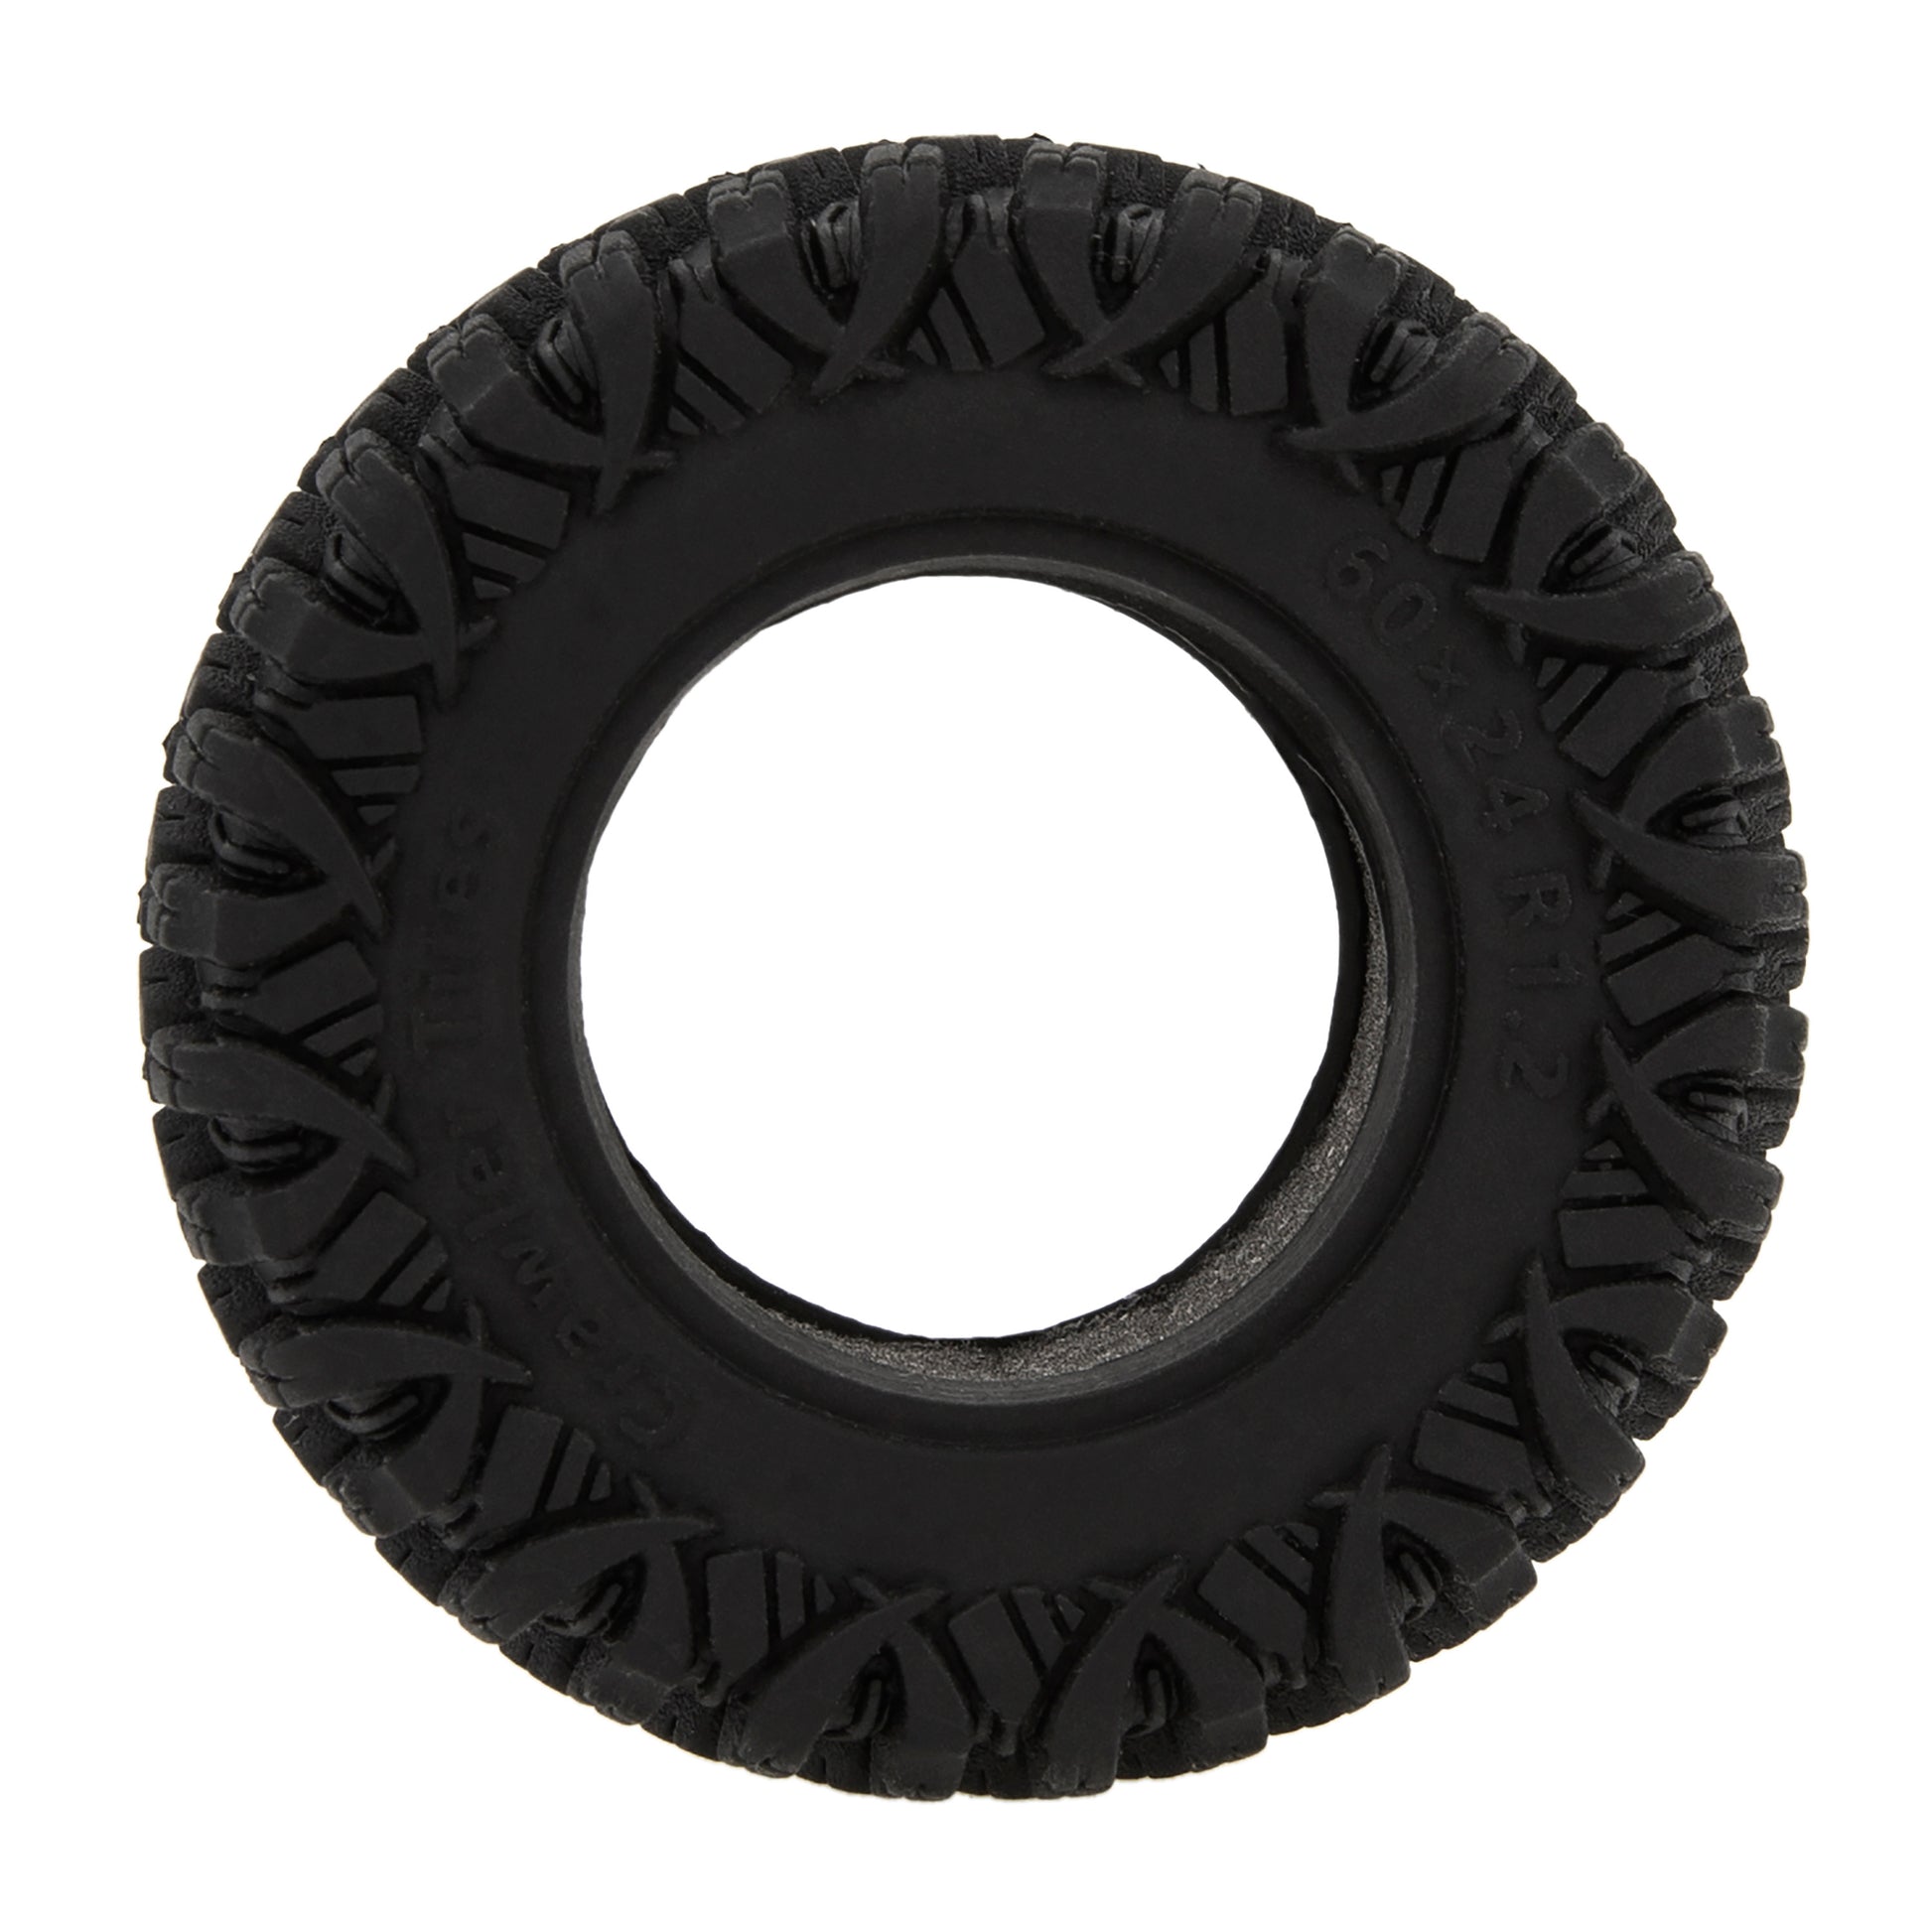 C type 1.2-inch Beadlock Tires for SCX24, TRX4M, FCX24